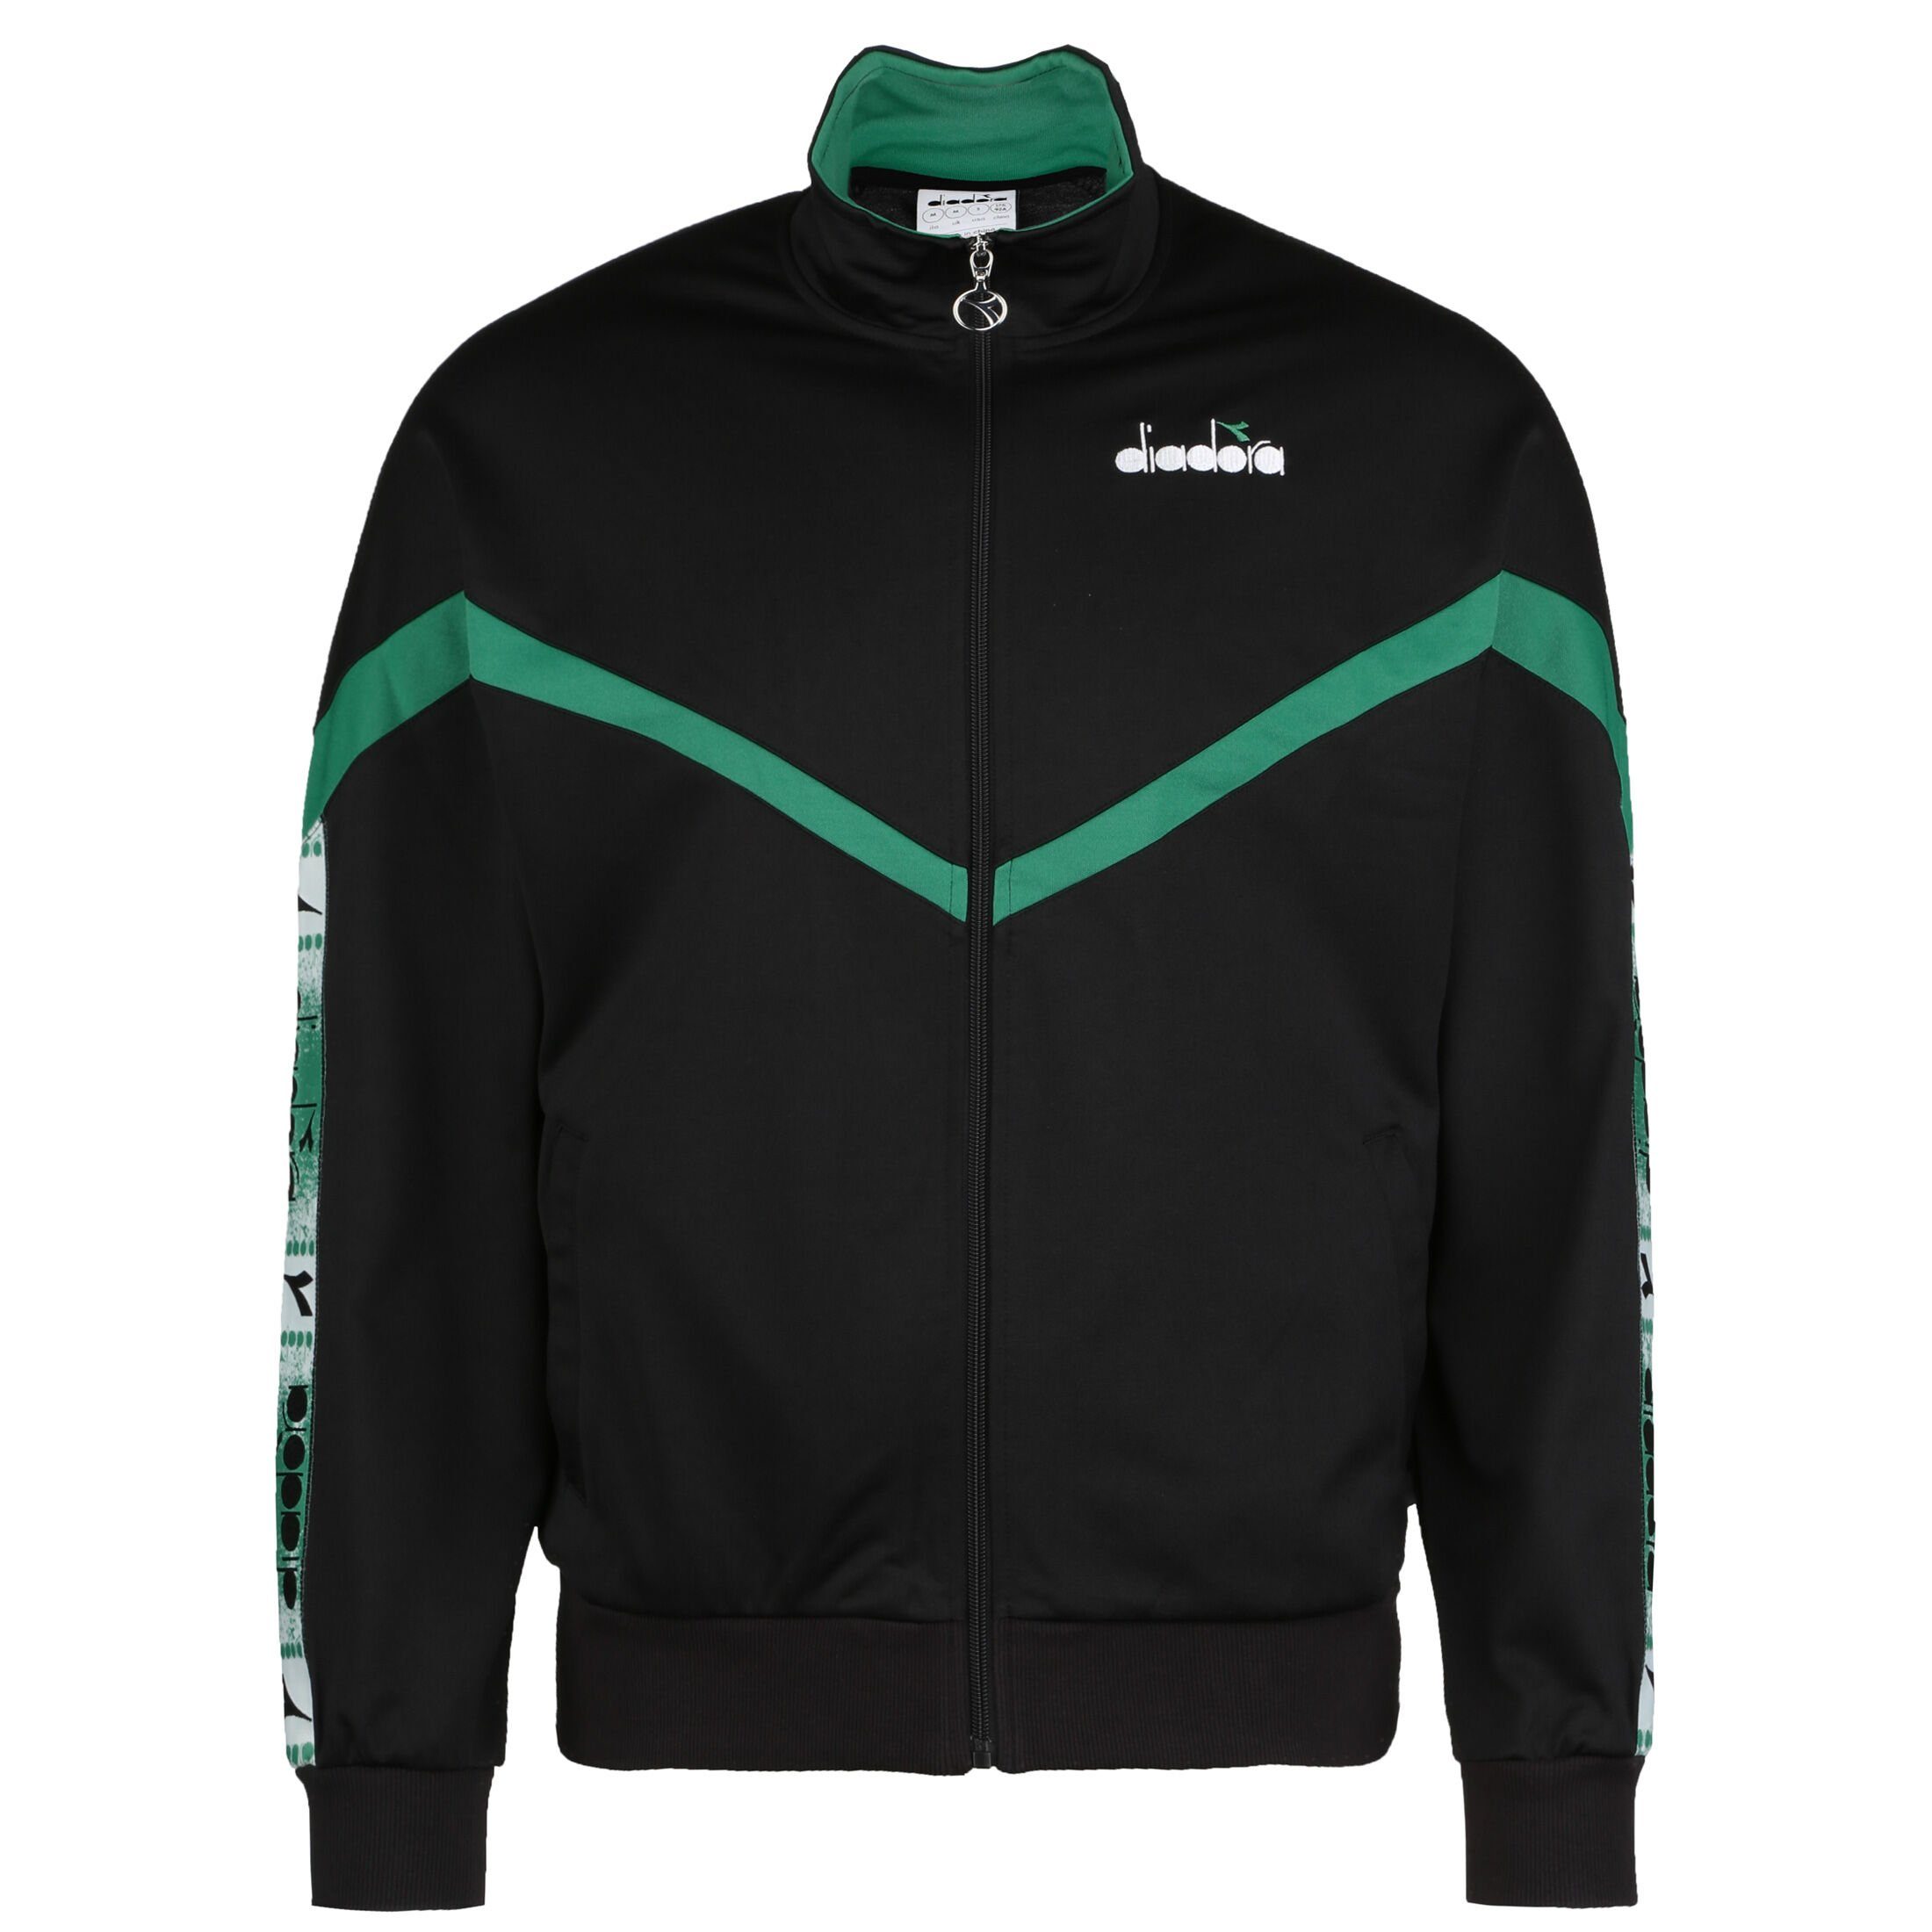 Diadora Sweatjacke Track Jacket Offside Jacke Herren schwarz / grün | Jacken